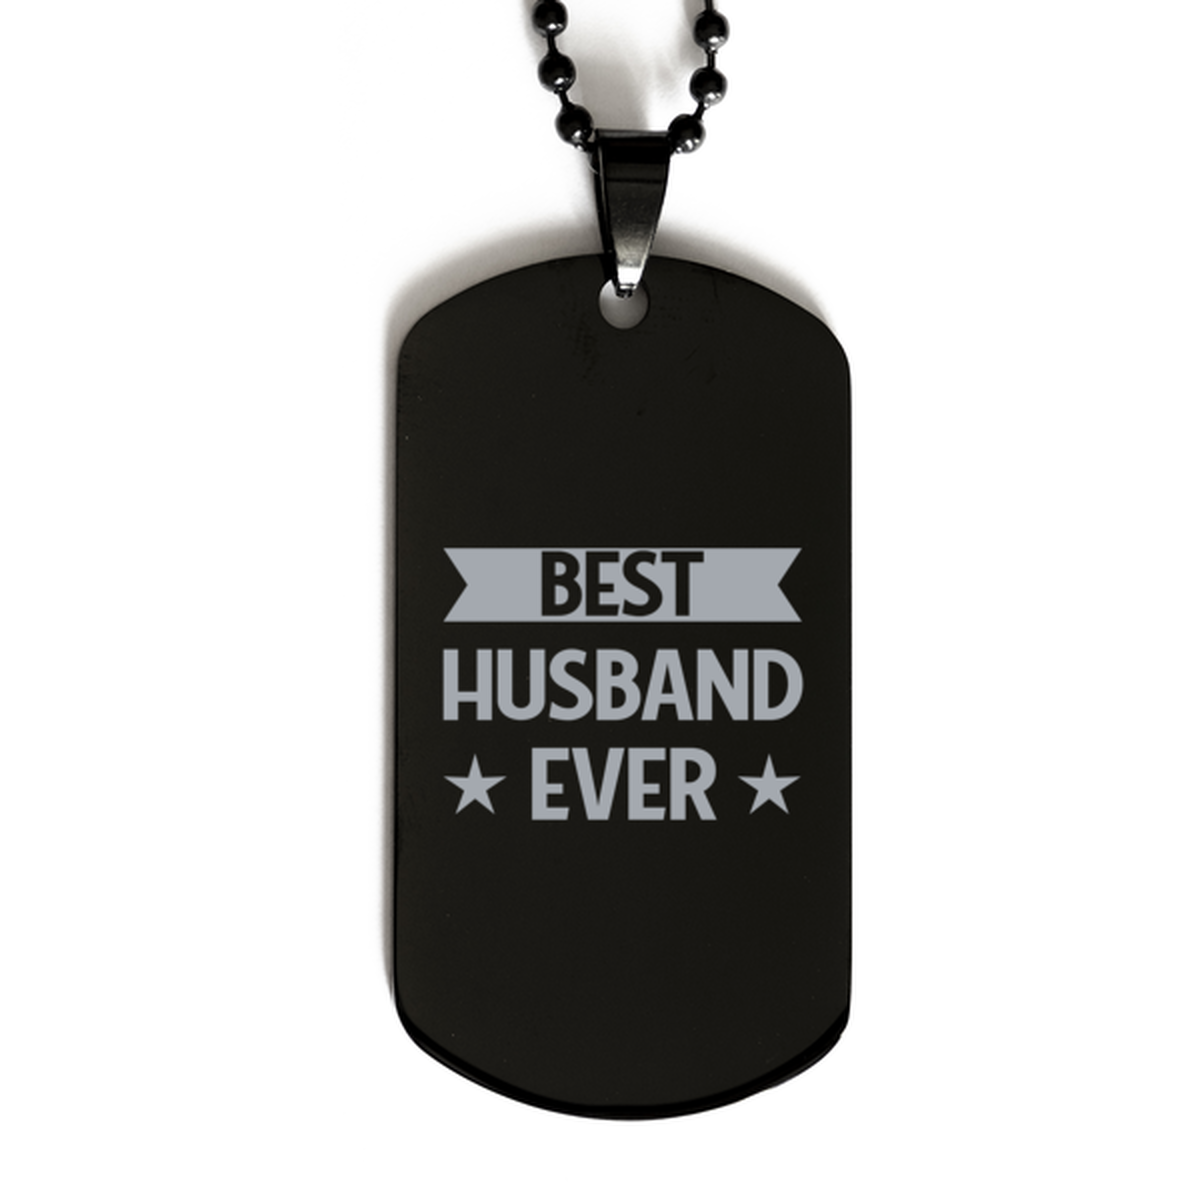 Best Husband Ever Husband Gifts, Funny Black Dog Tag For Husband, Birthday Family Presents Engraved Necklace For Men